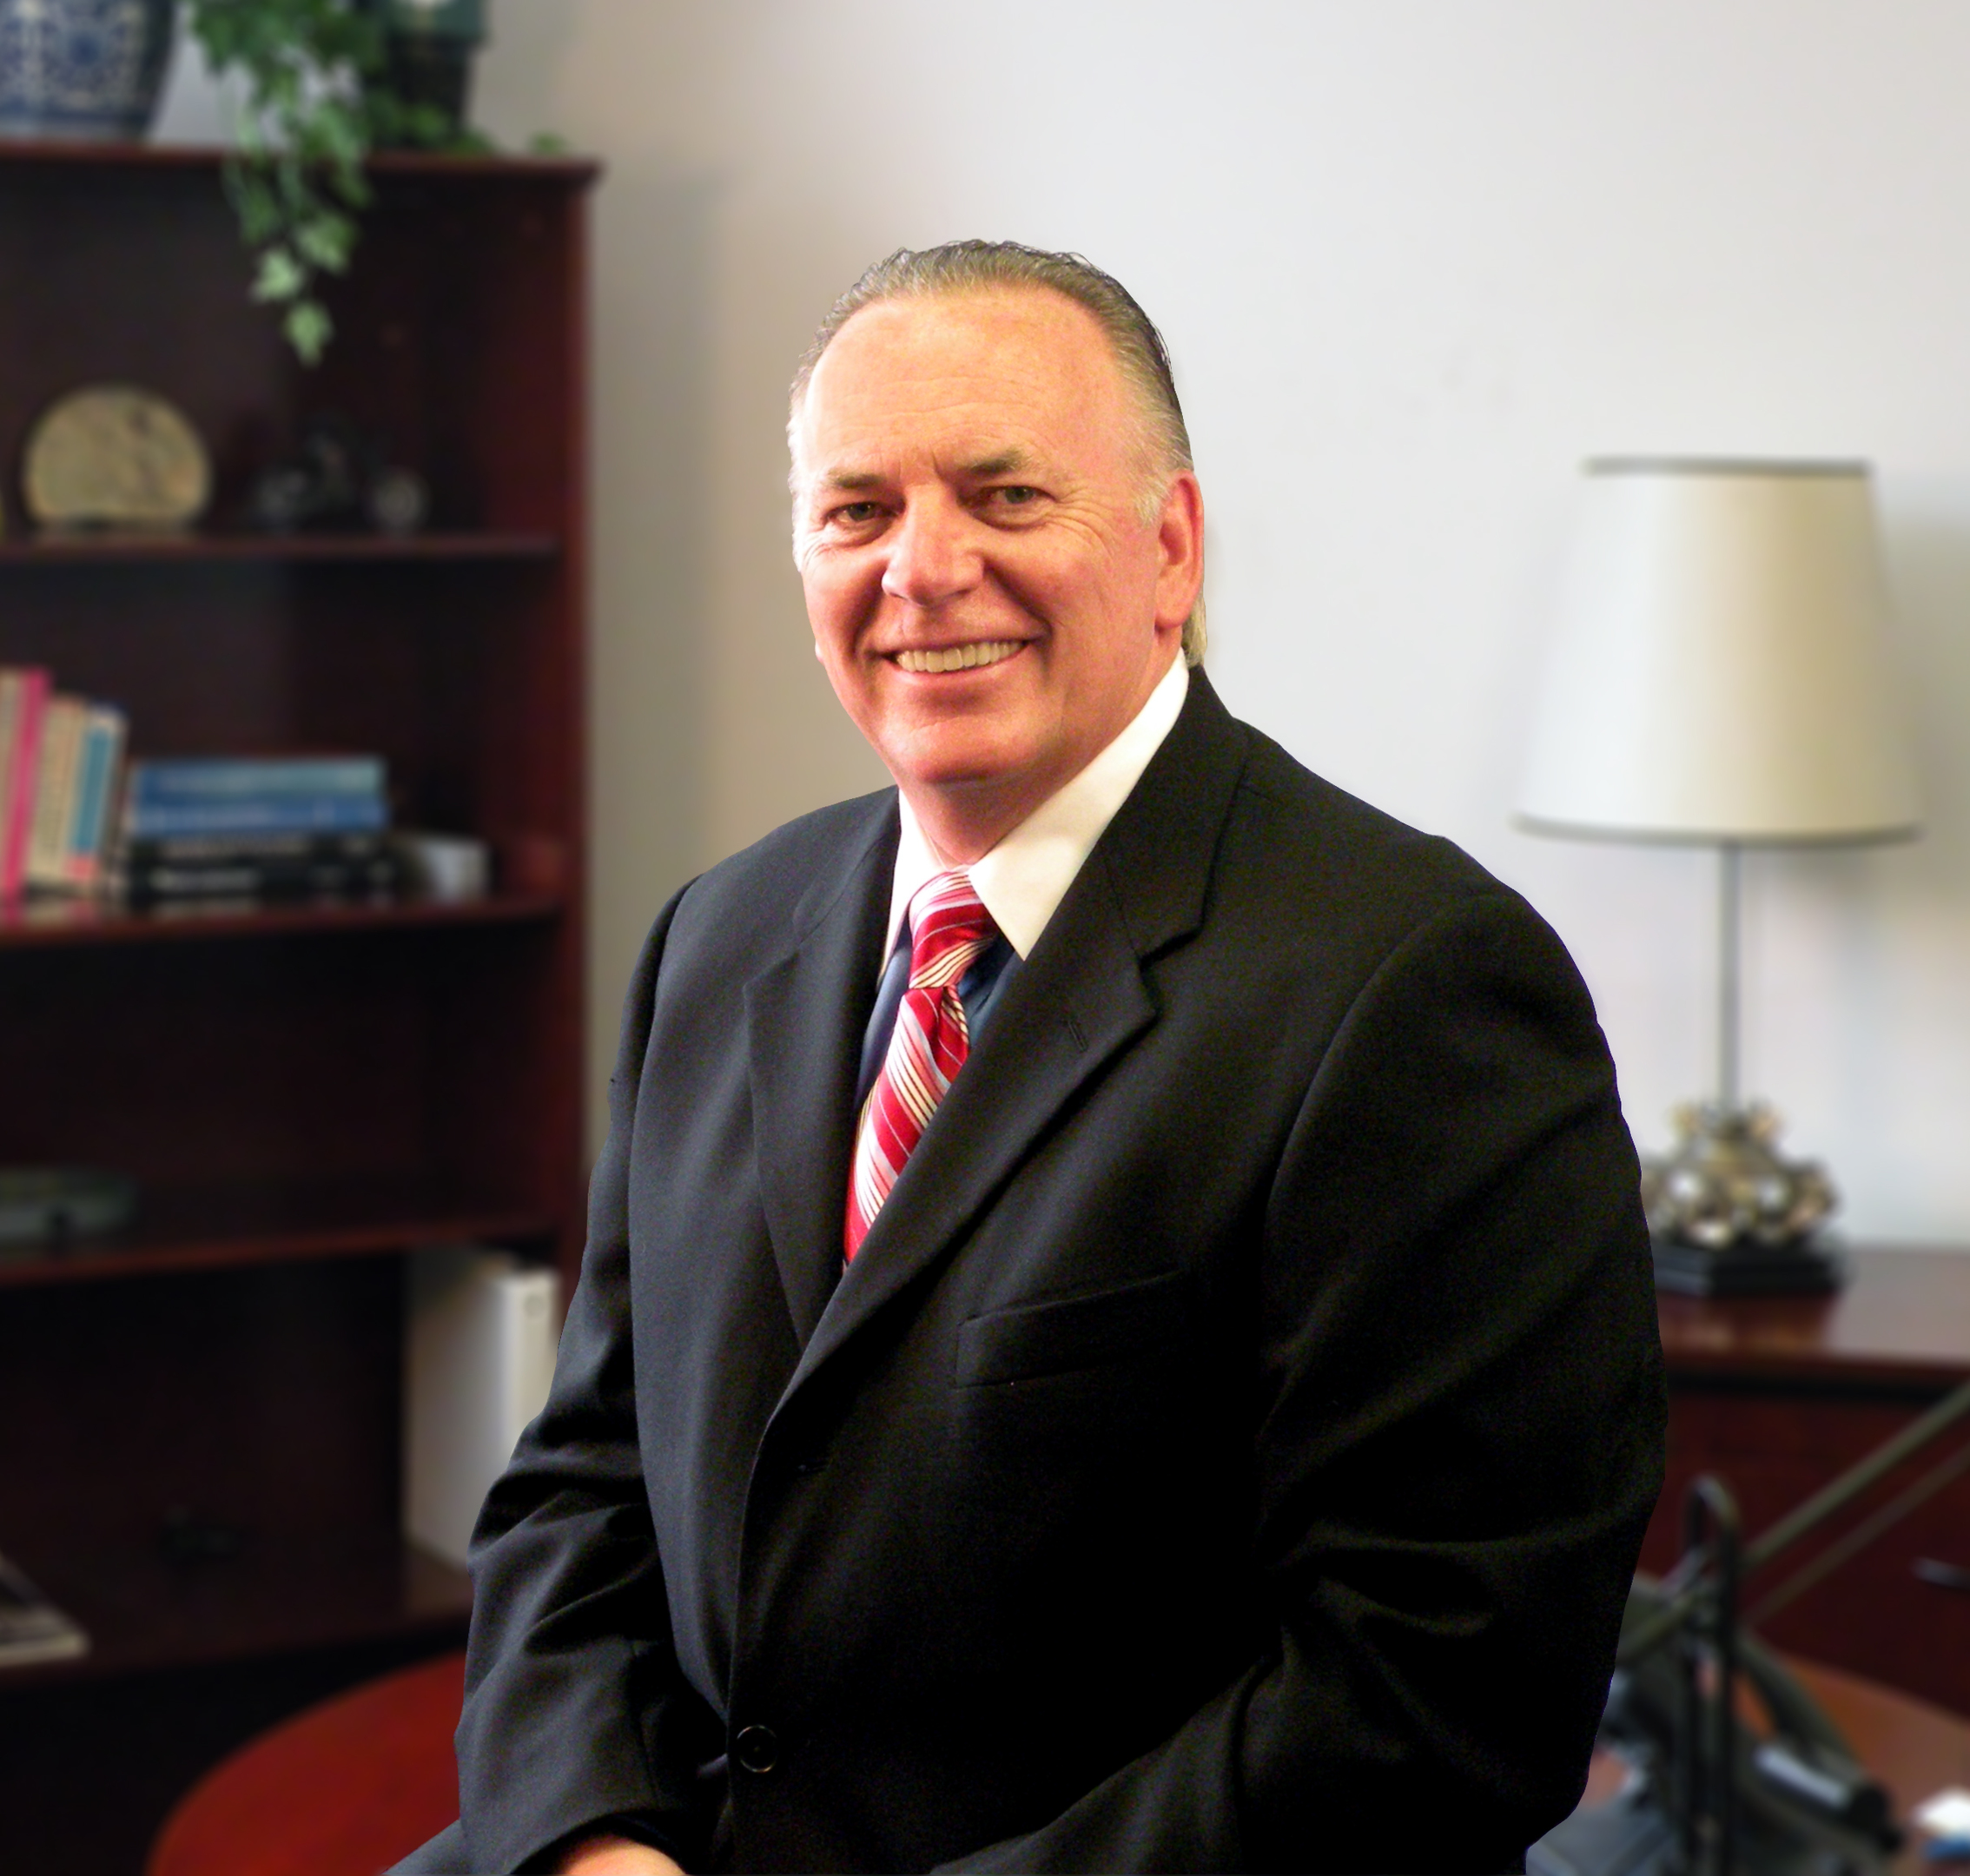 Jim Nixon - President and CEO of Carrollton